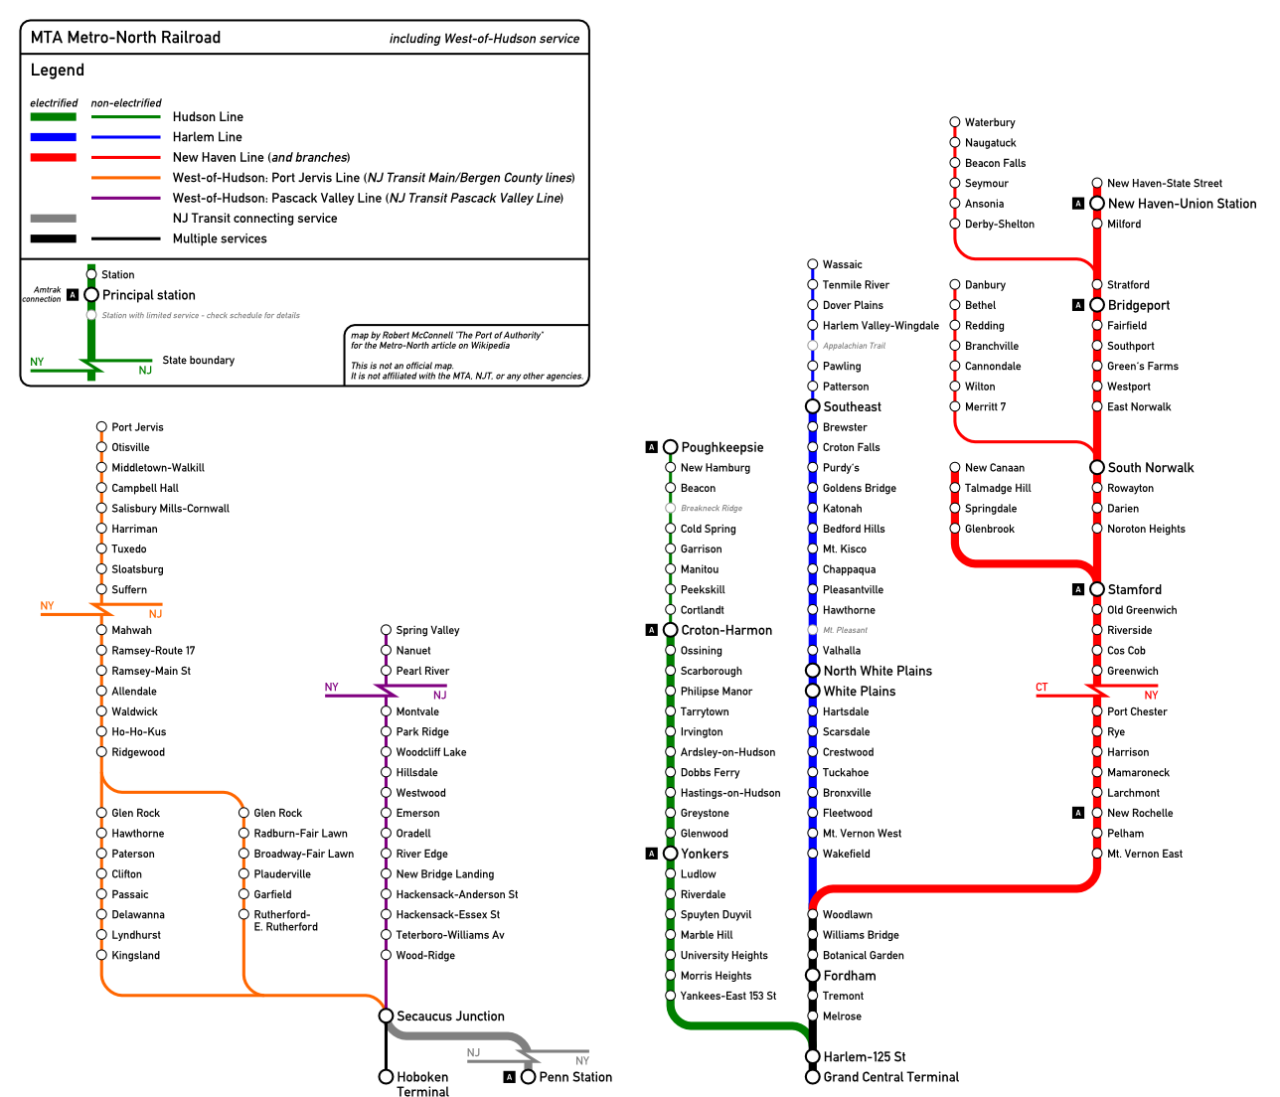 File:Metro-North Railroad Map.Png - Wikipedia